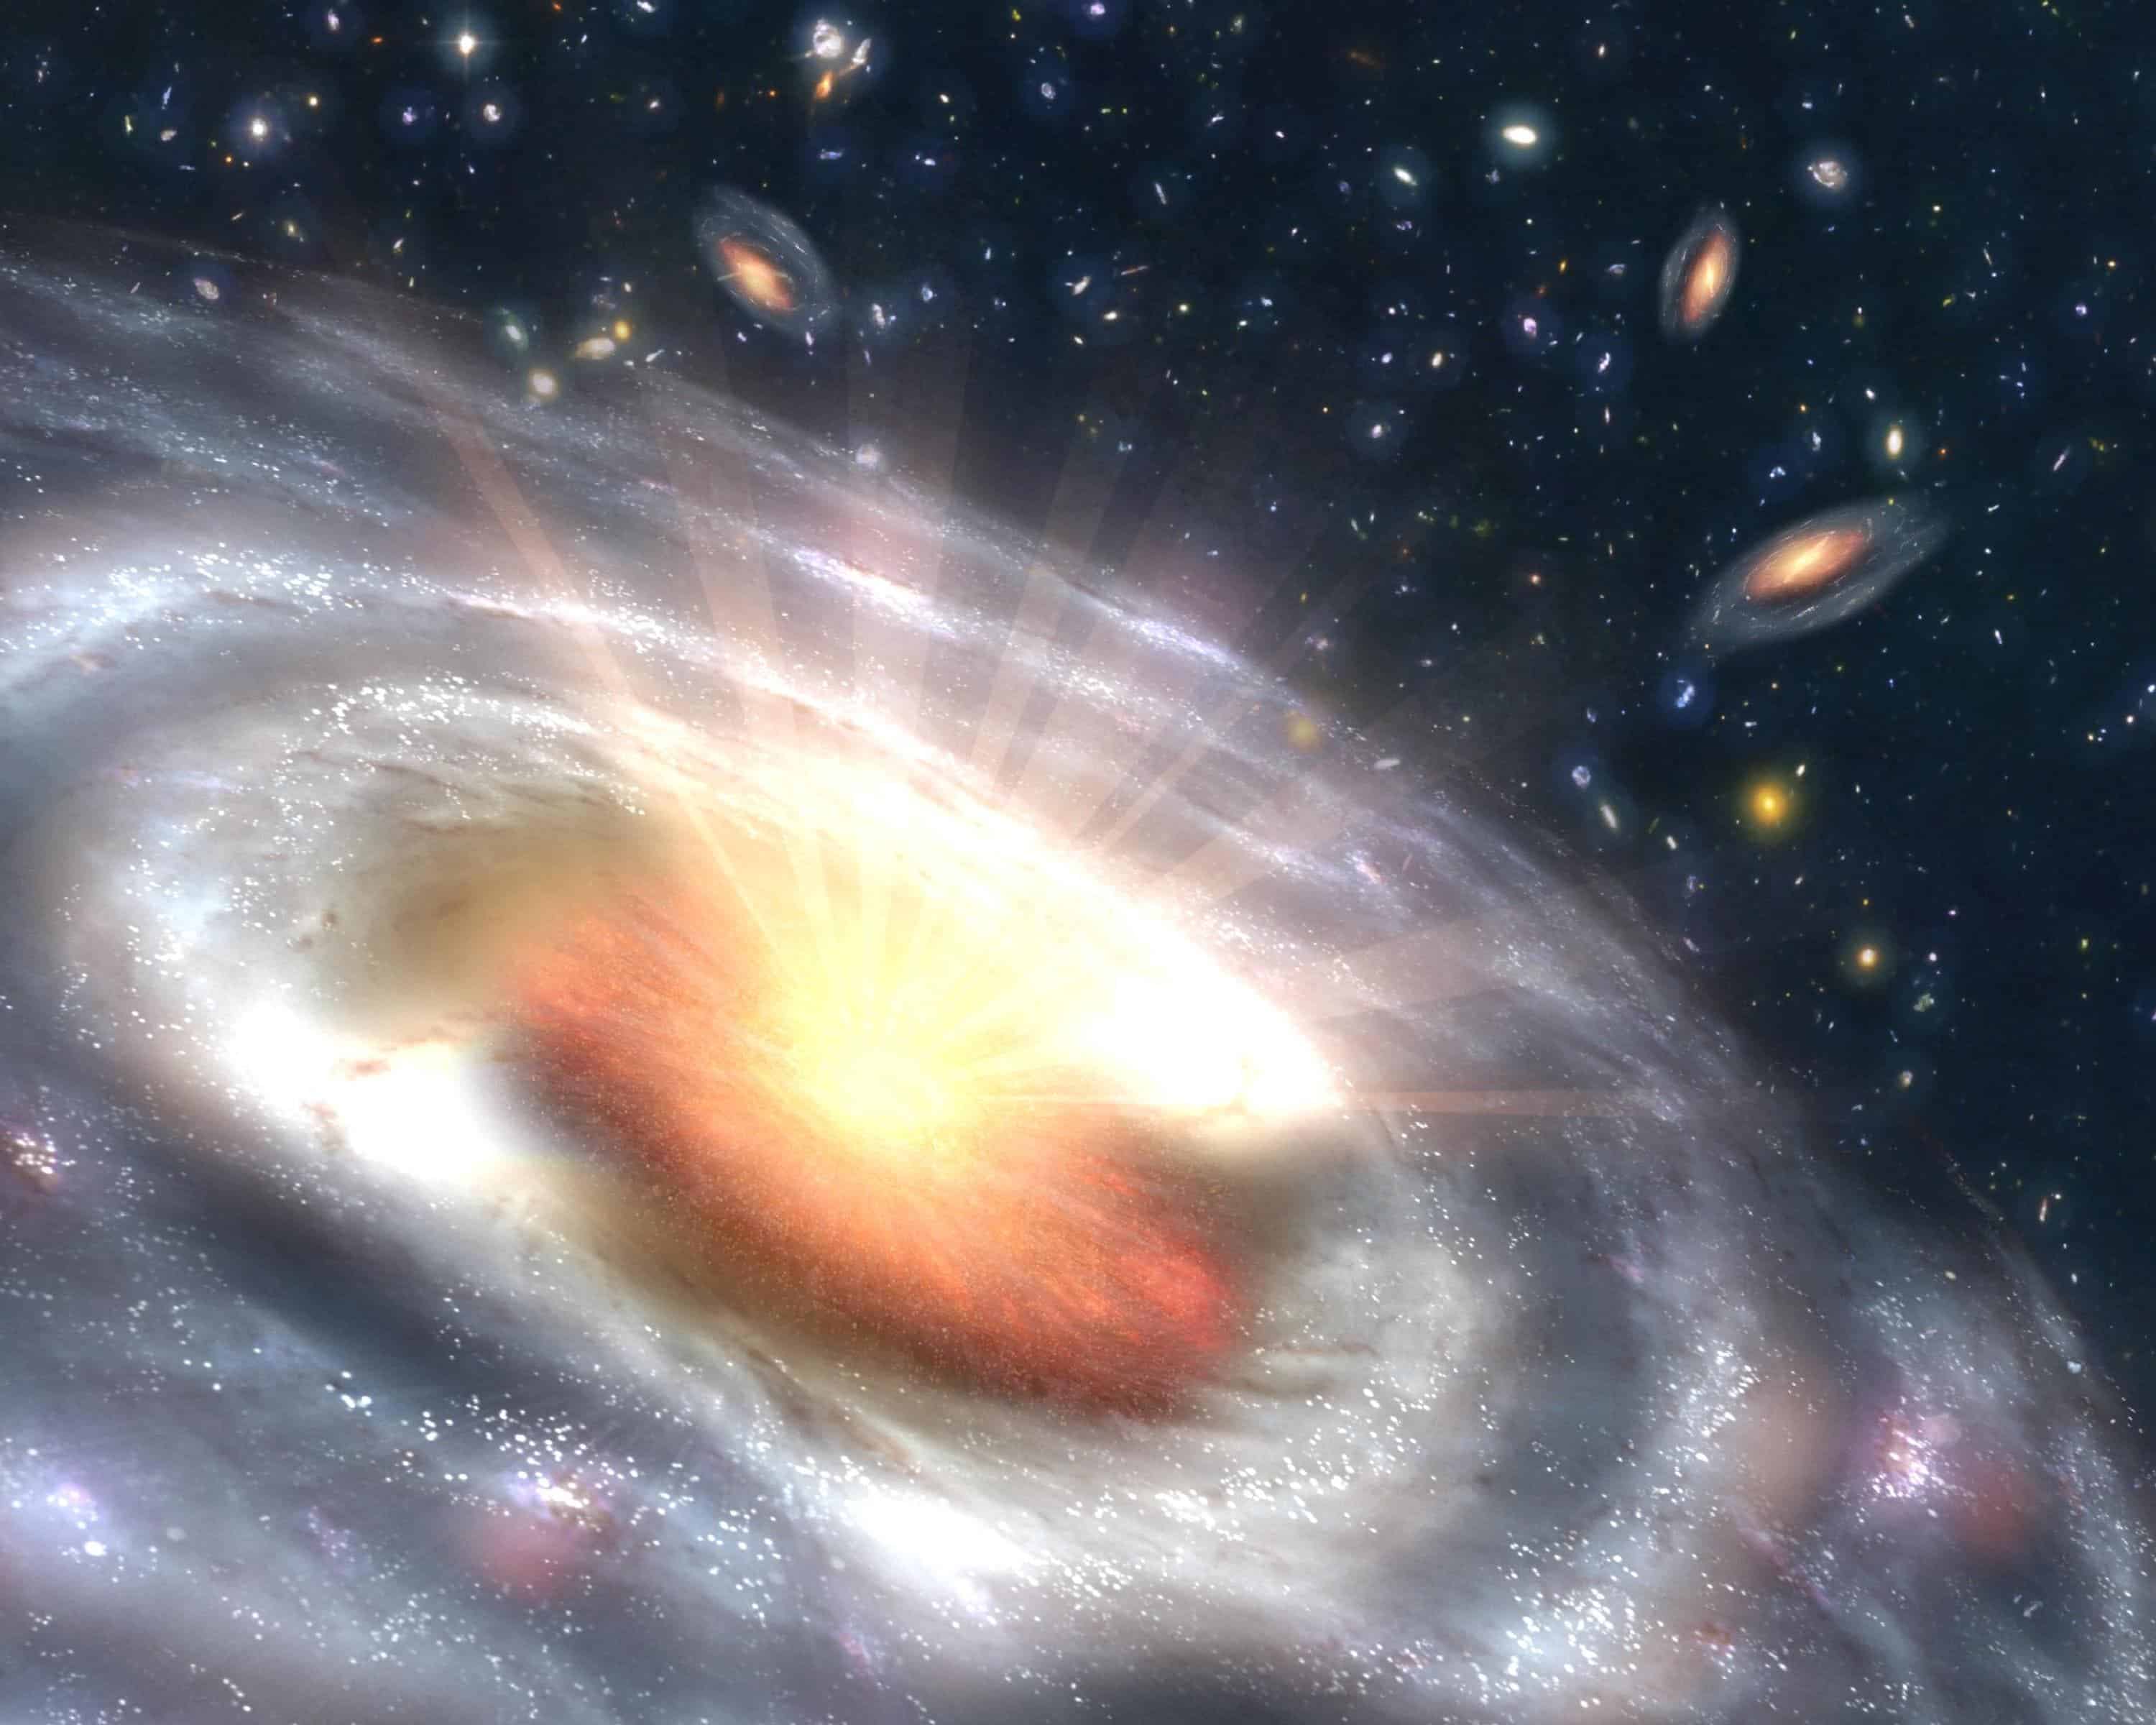 Artistic depiction of quasars. Image credits: NASA / JPL.